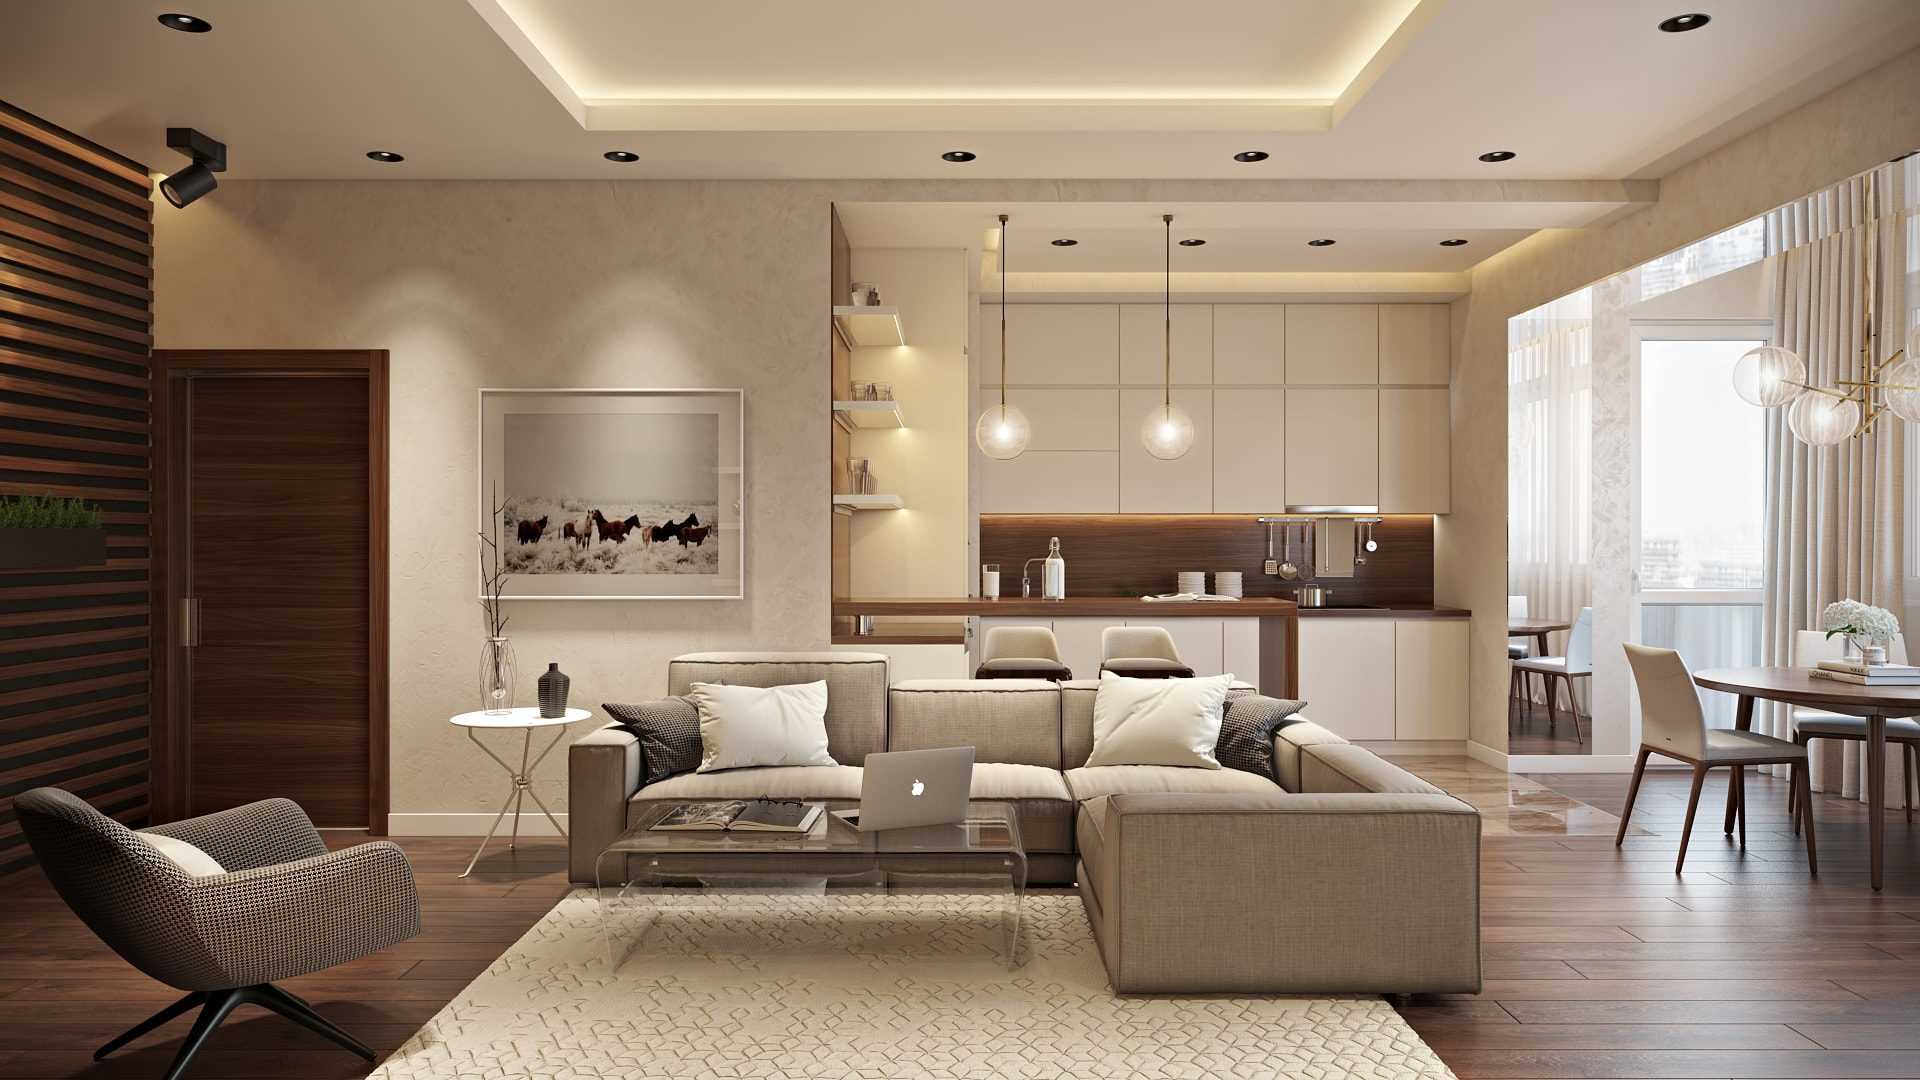 option of using light design in a beautiful apartment interior